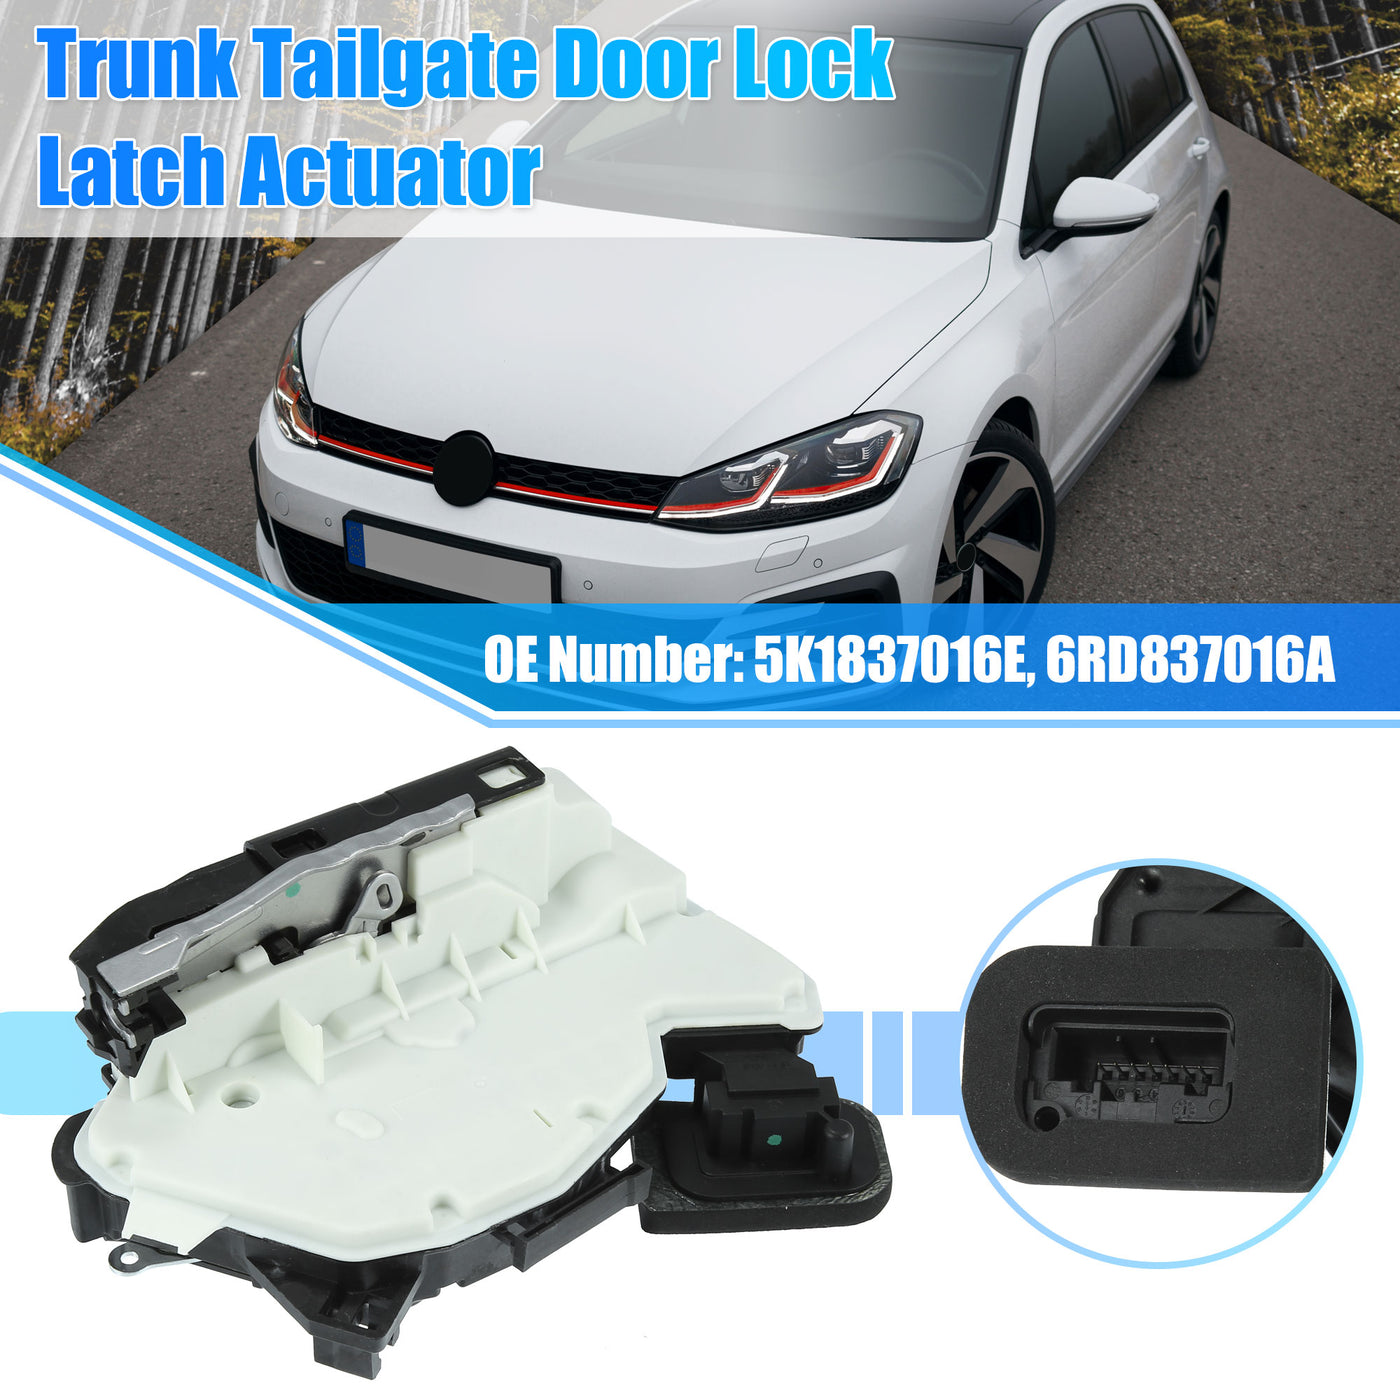 X AUTOHAUX Front Right Side Door Lock Actuator Motor for Volkswagen Jetta Beetle Passat Golf 2011-2017 5K1837016E 6RD837016A